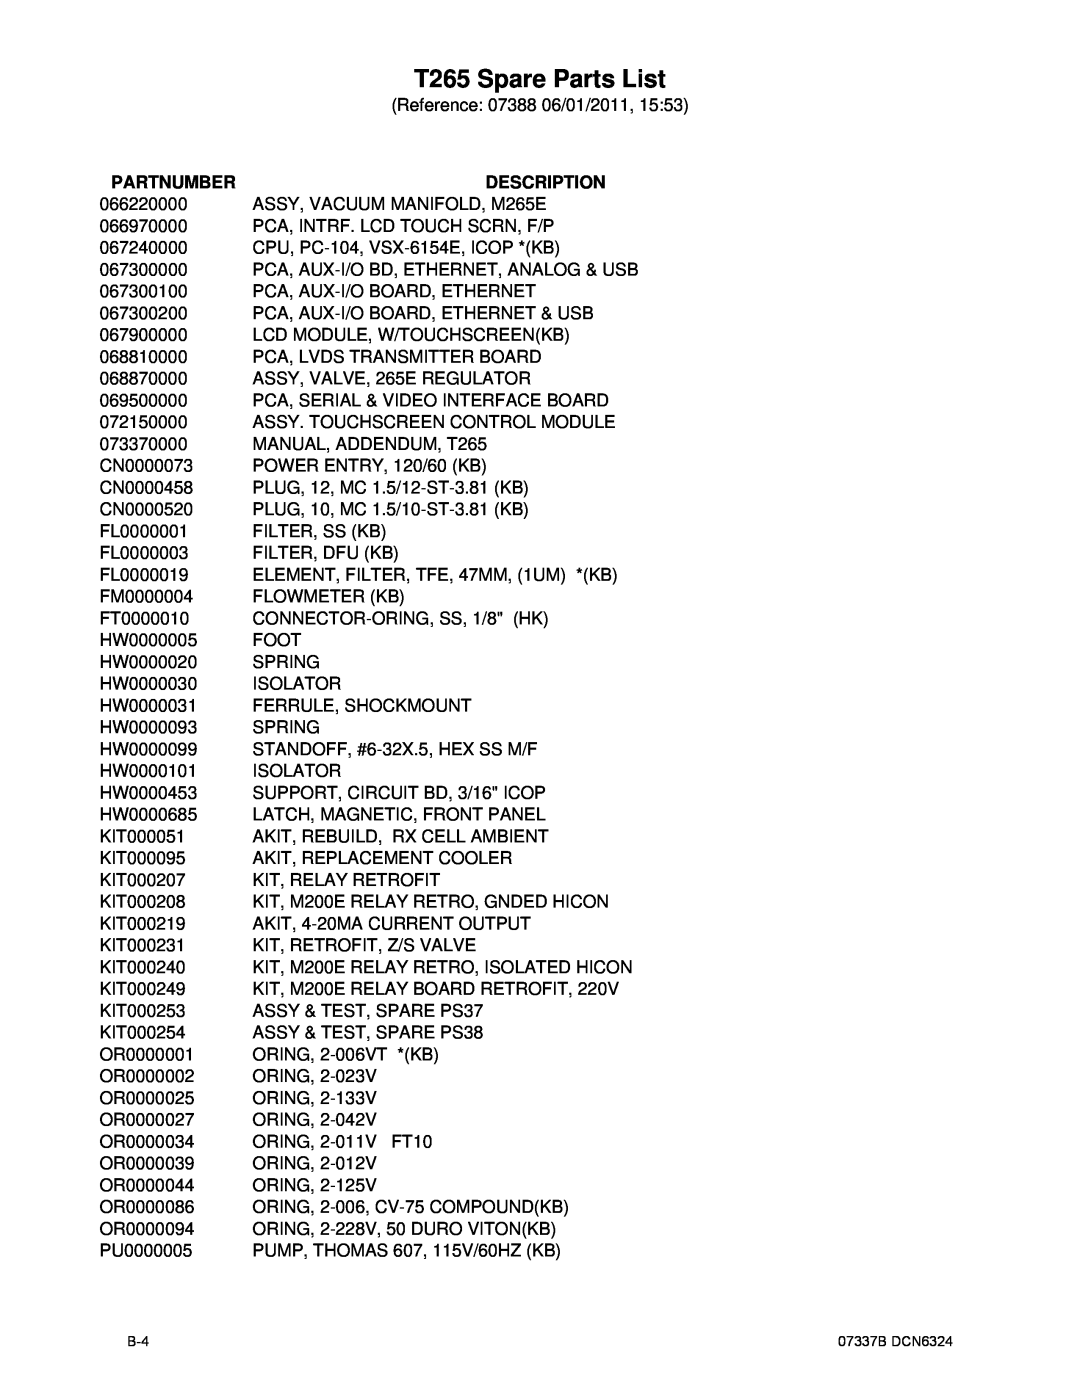 Teledyne manual T265 Spare Parts List, Reference 07388 06/01/2011, Partnumber, Description 